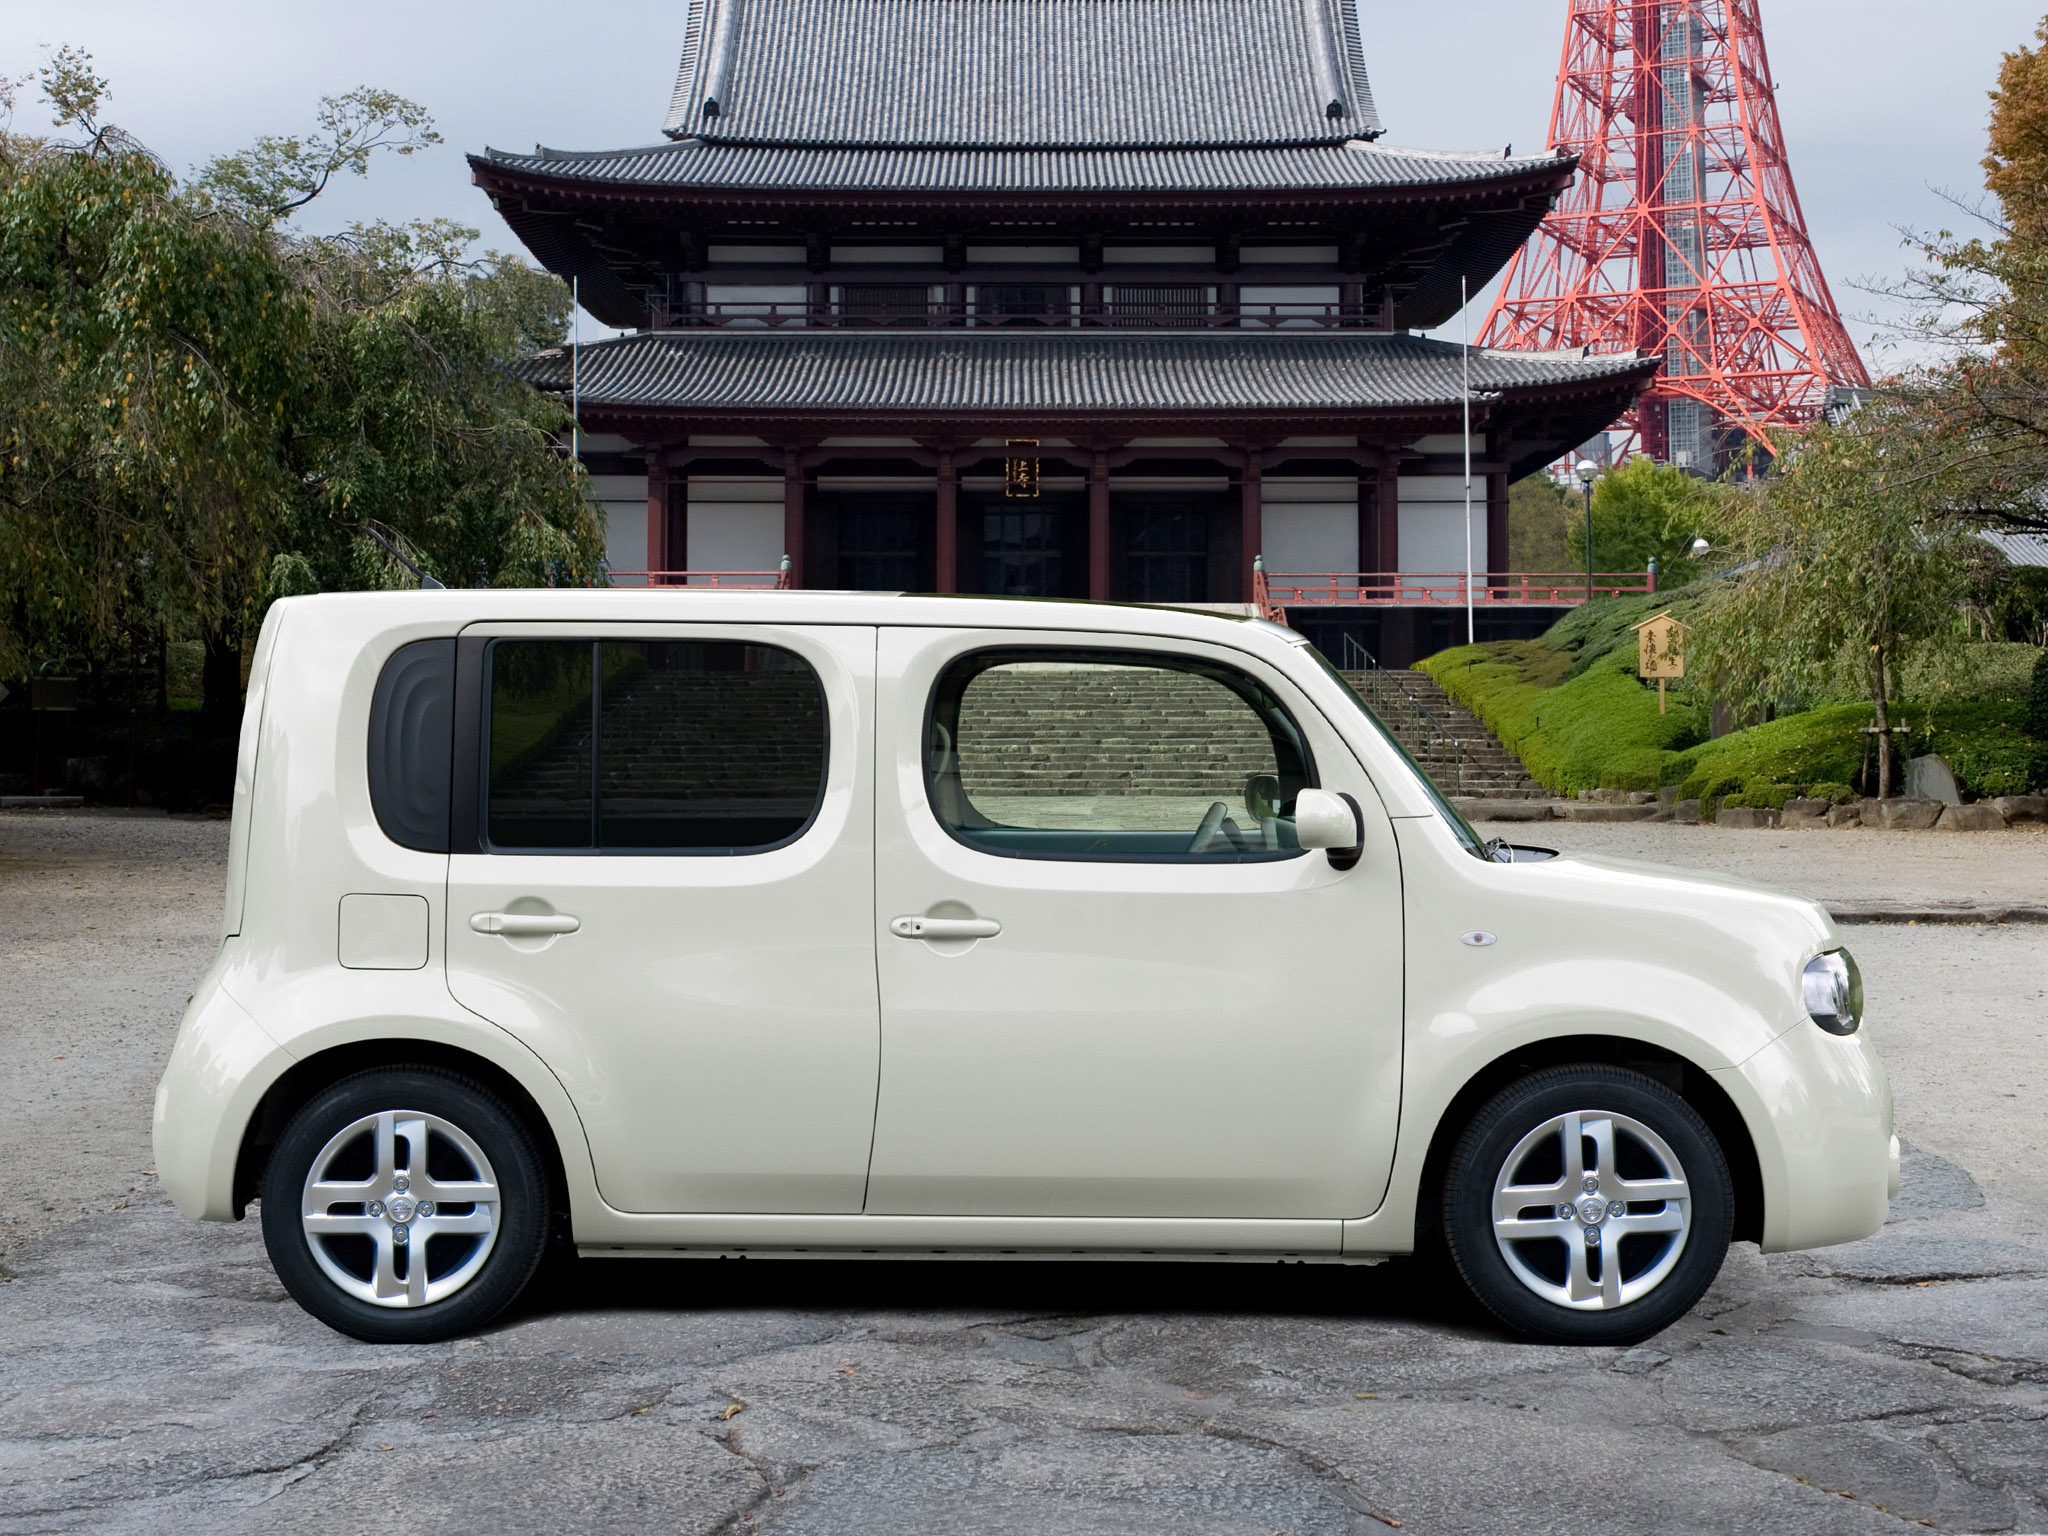 Nissan altima japanese version